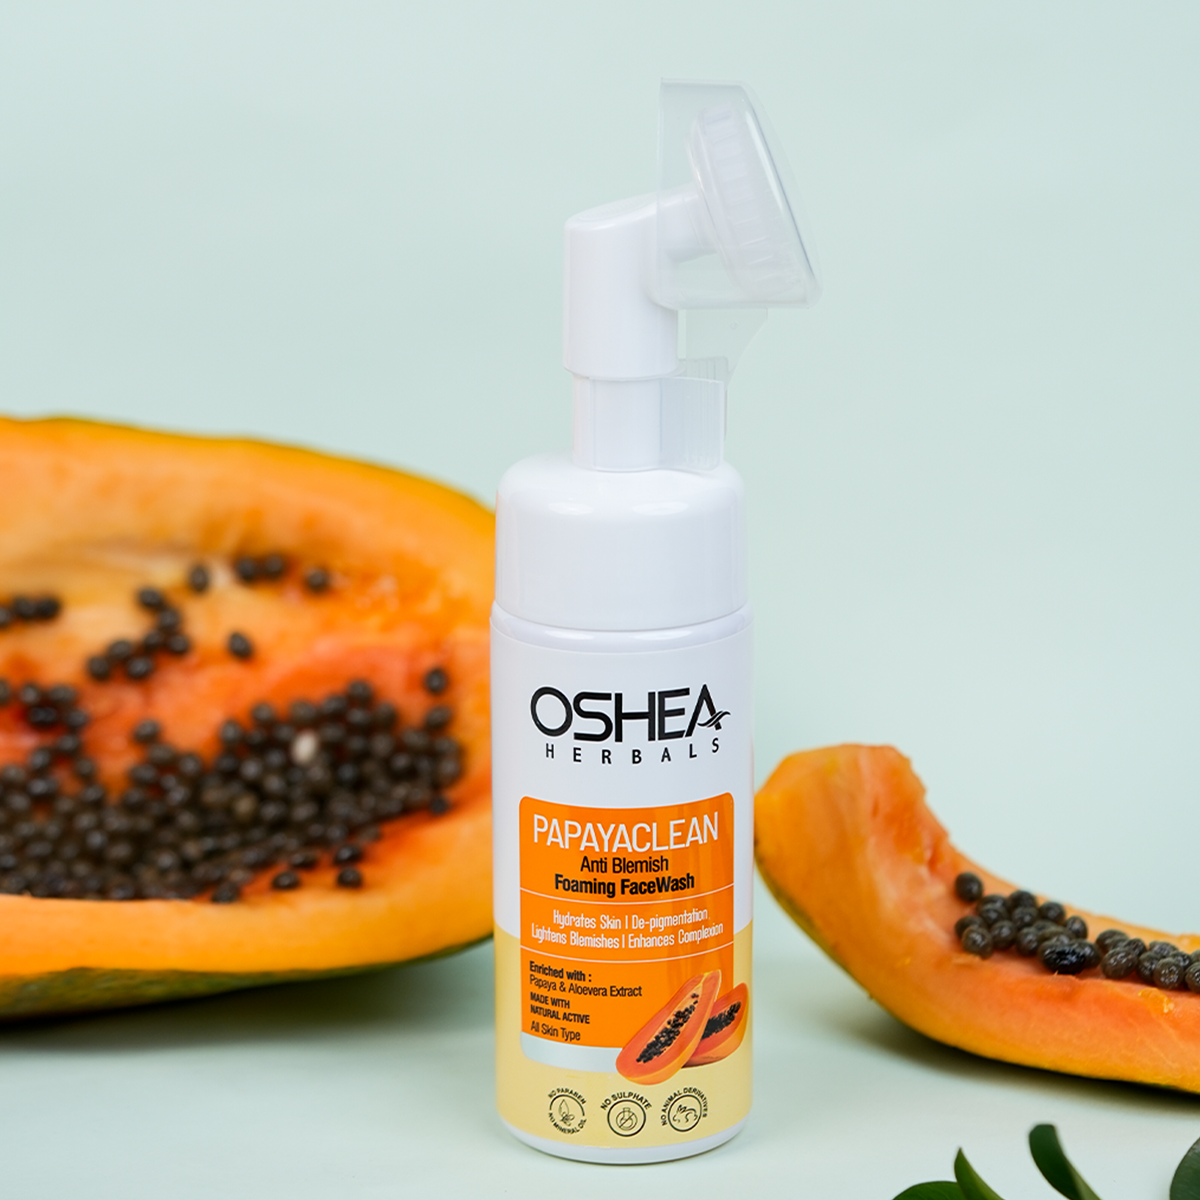 Papayaclean Anti Blemish Foaming Face wash Oshea Herbals